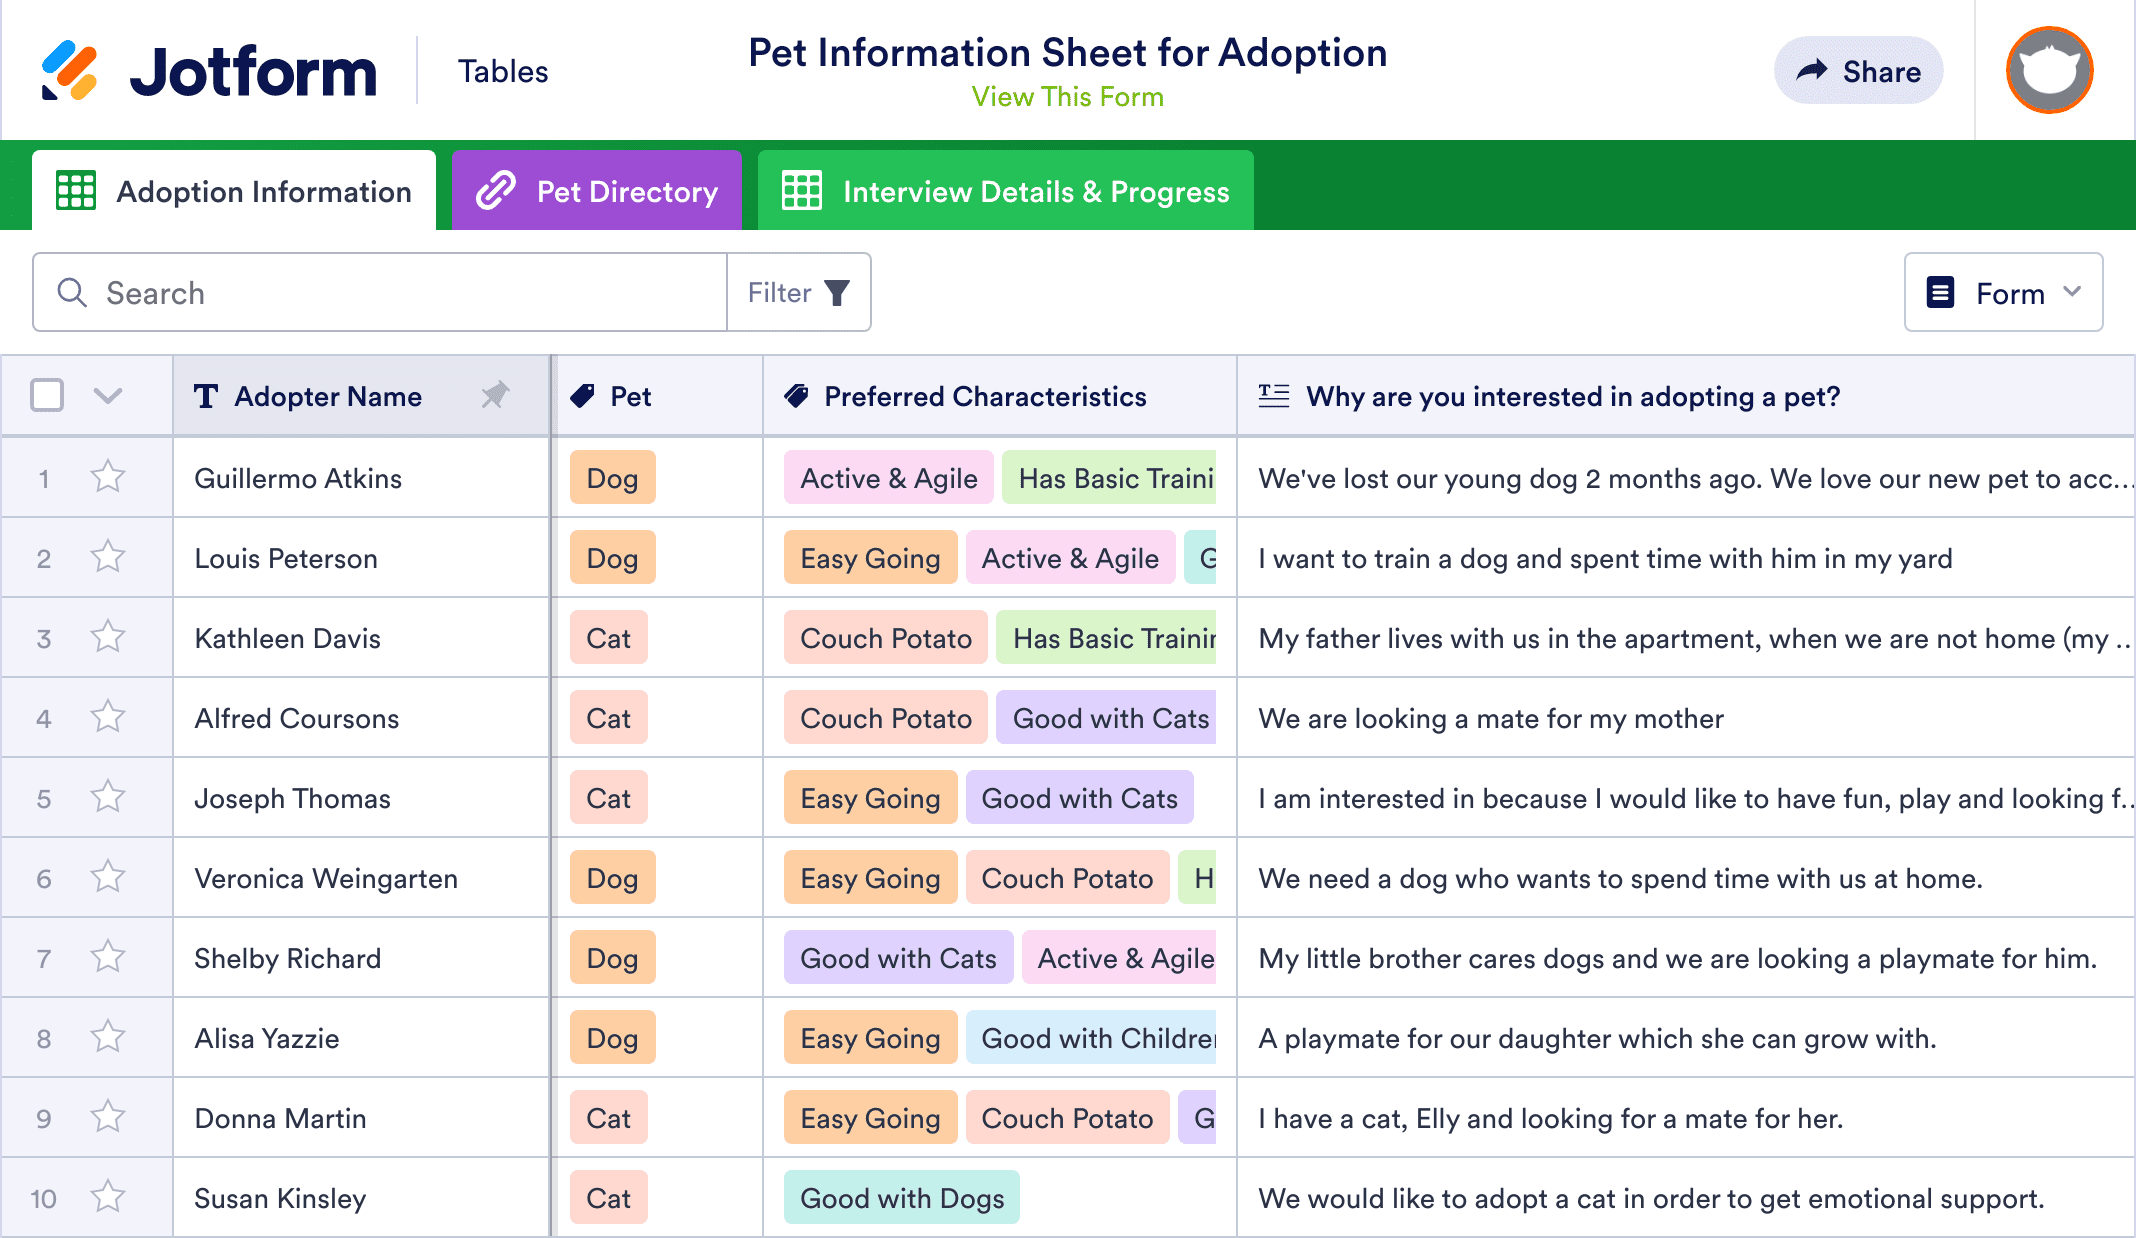 Pet Information Sheet for Adoption